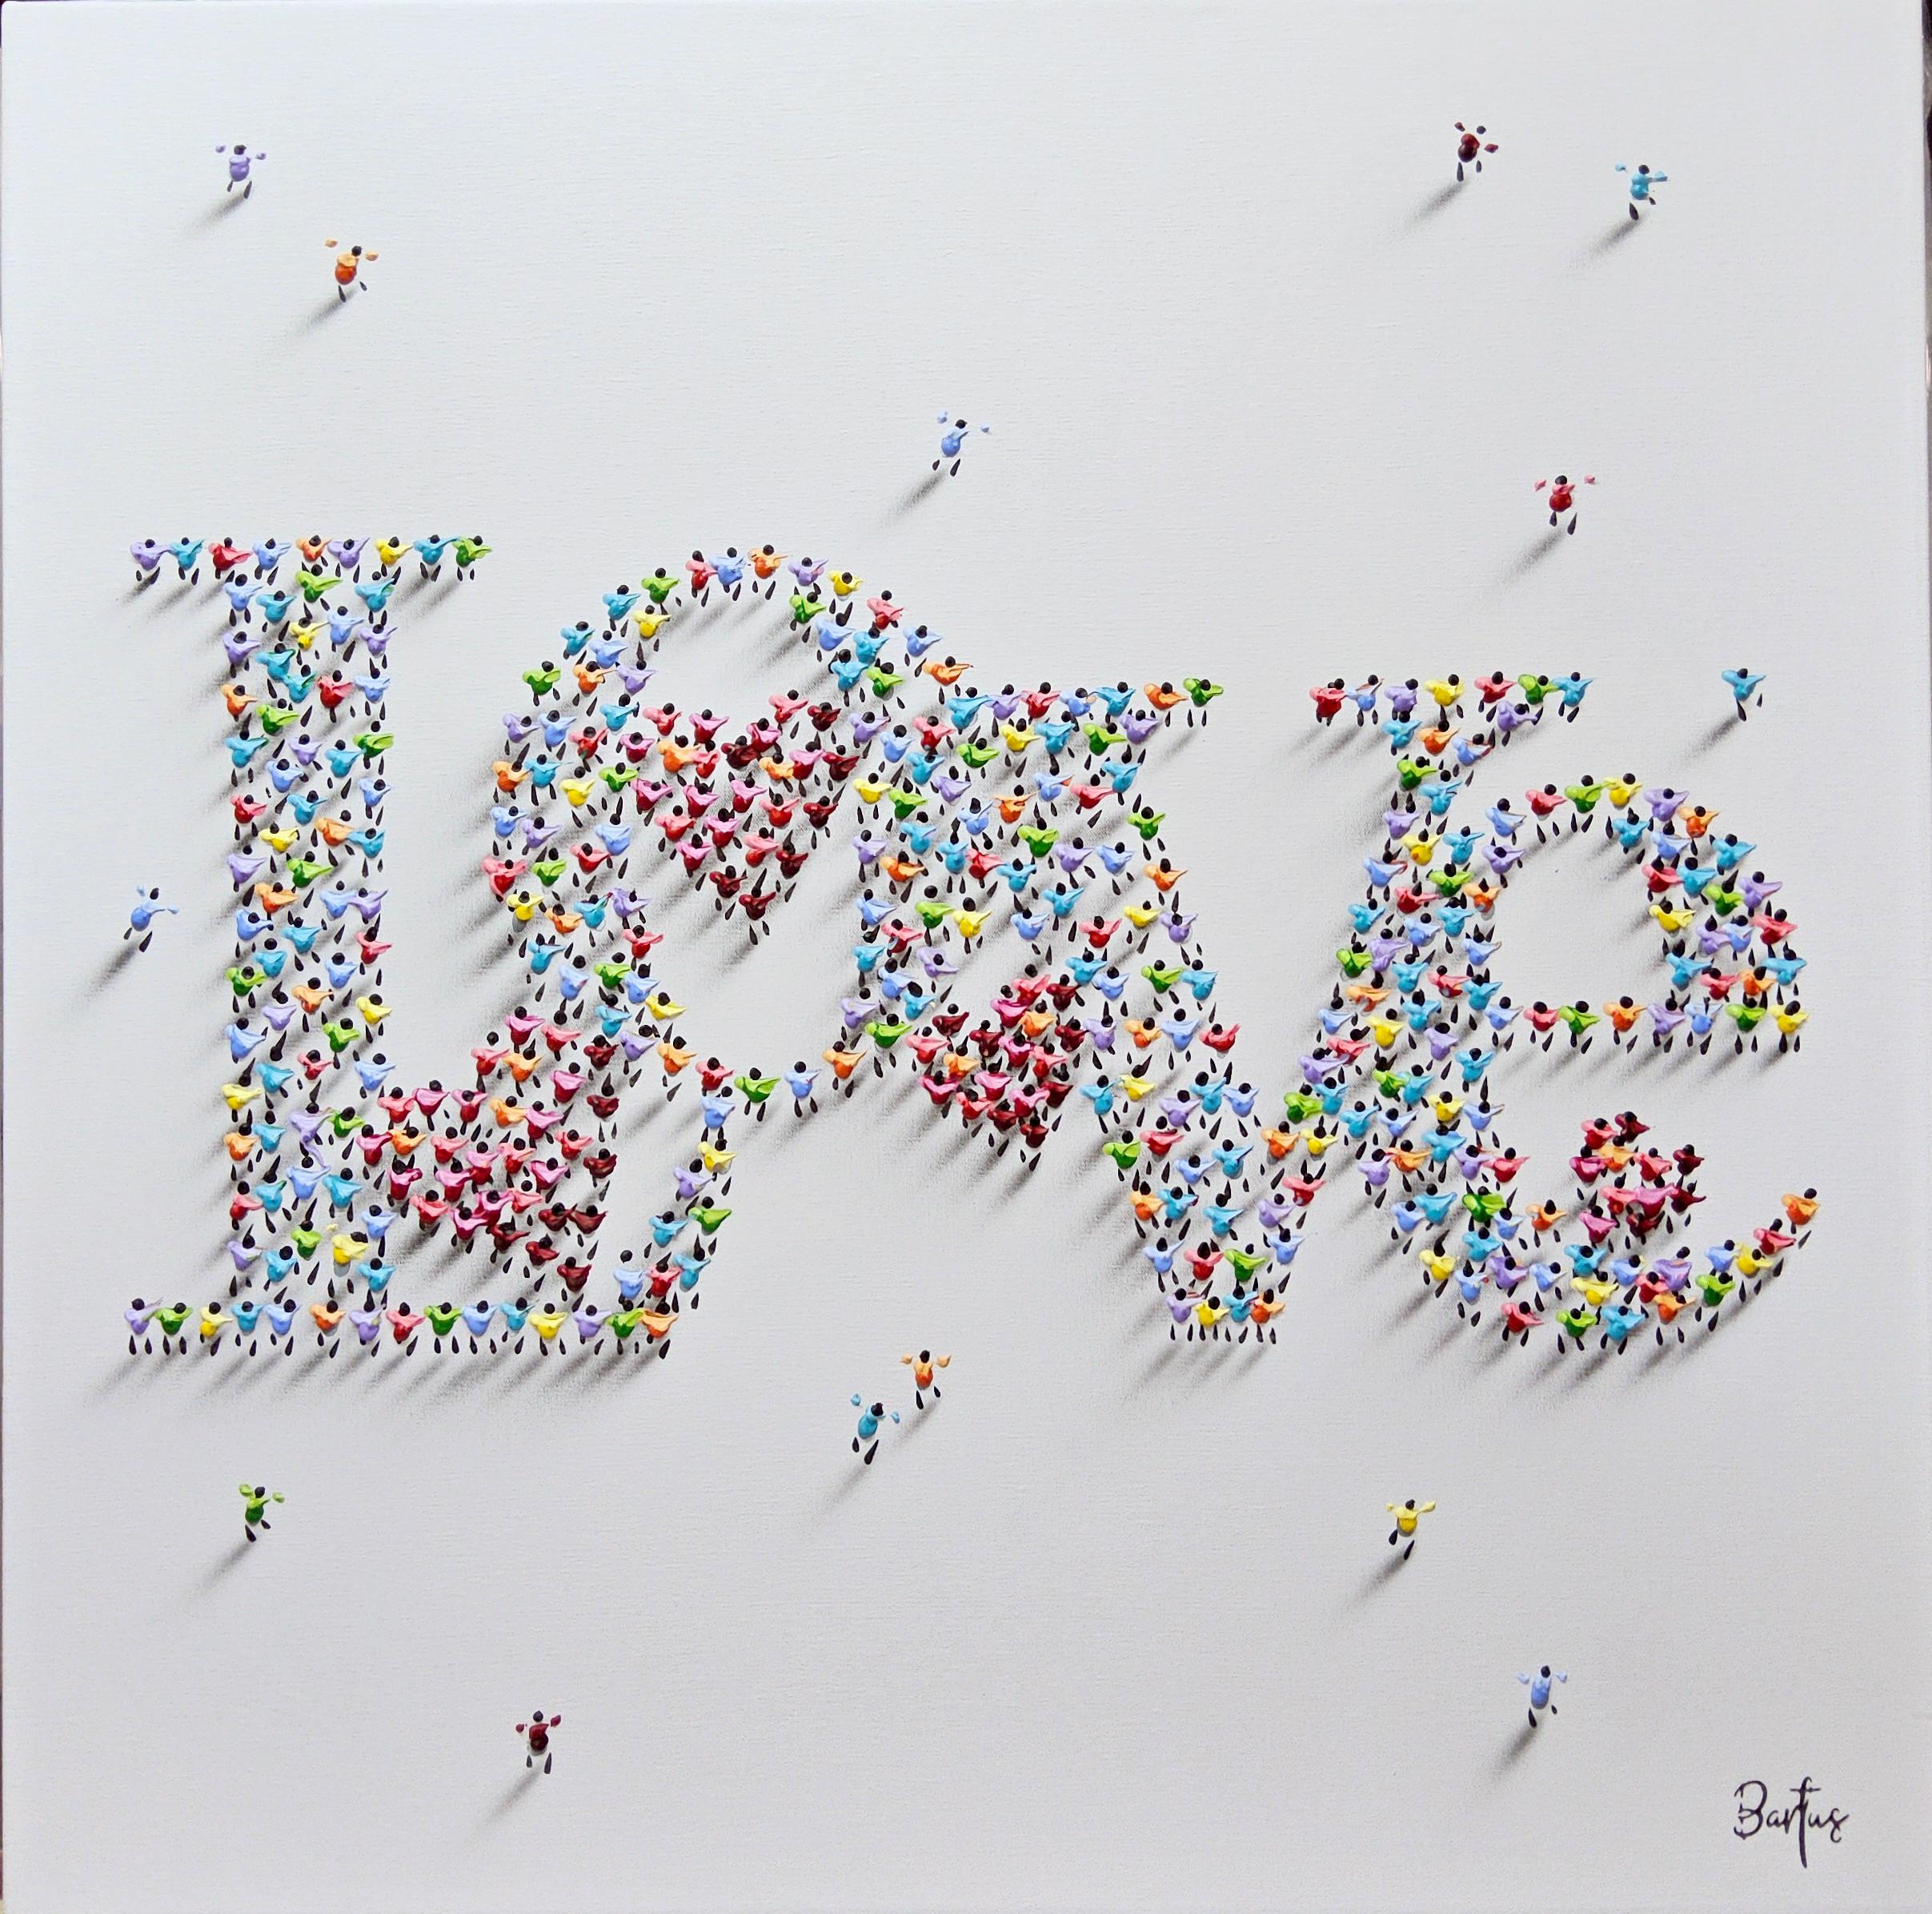 Francisco Bartus, „All You Need is Love“, 32x32, Texturiertes Gemälde in Mischtechnik 